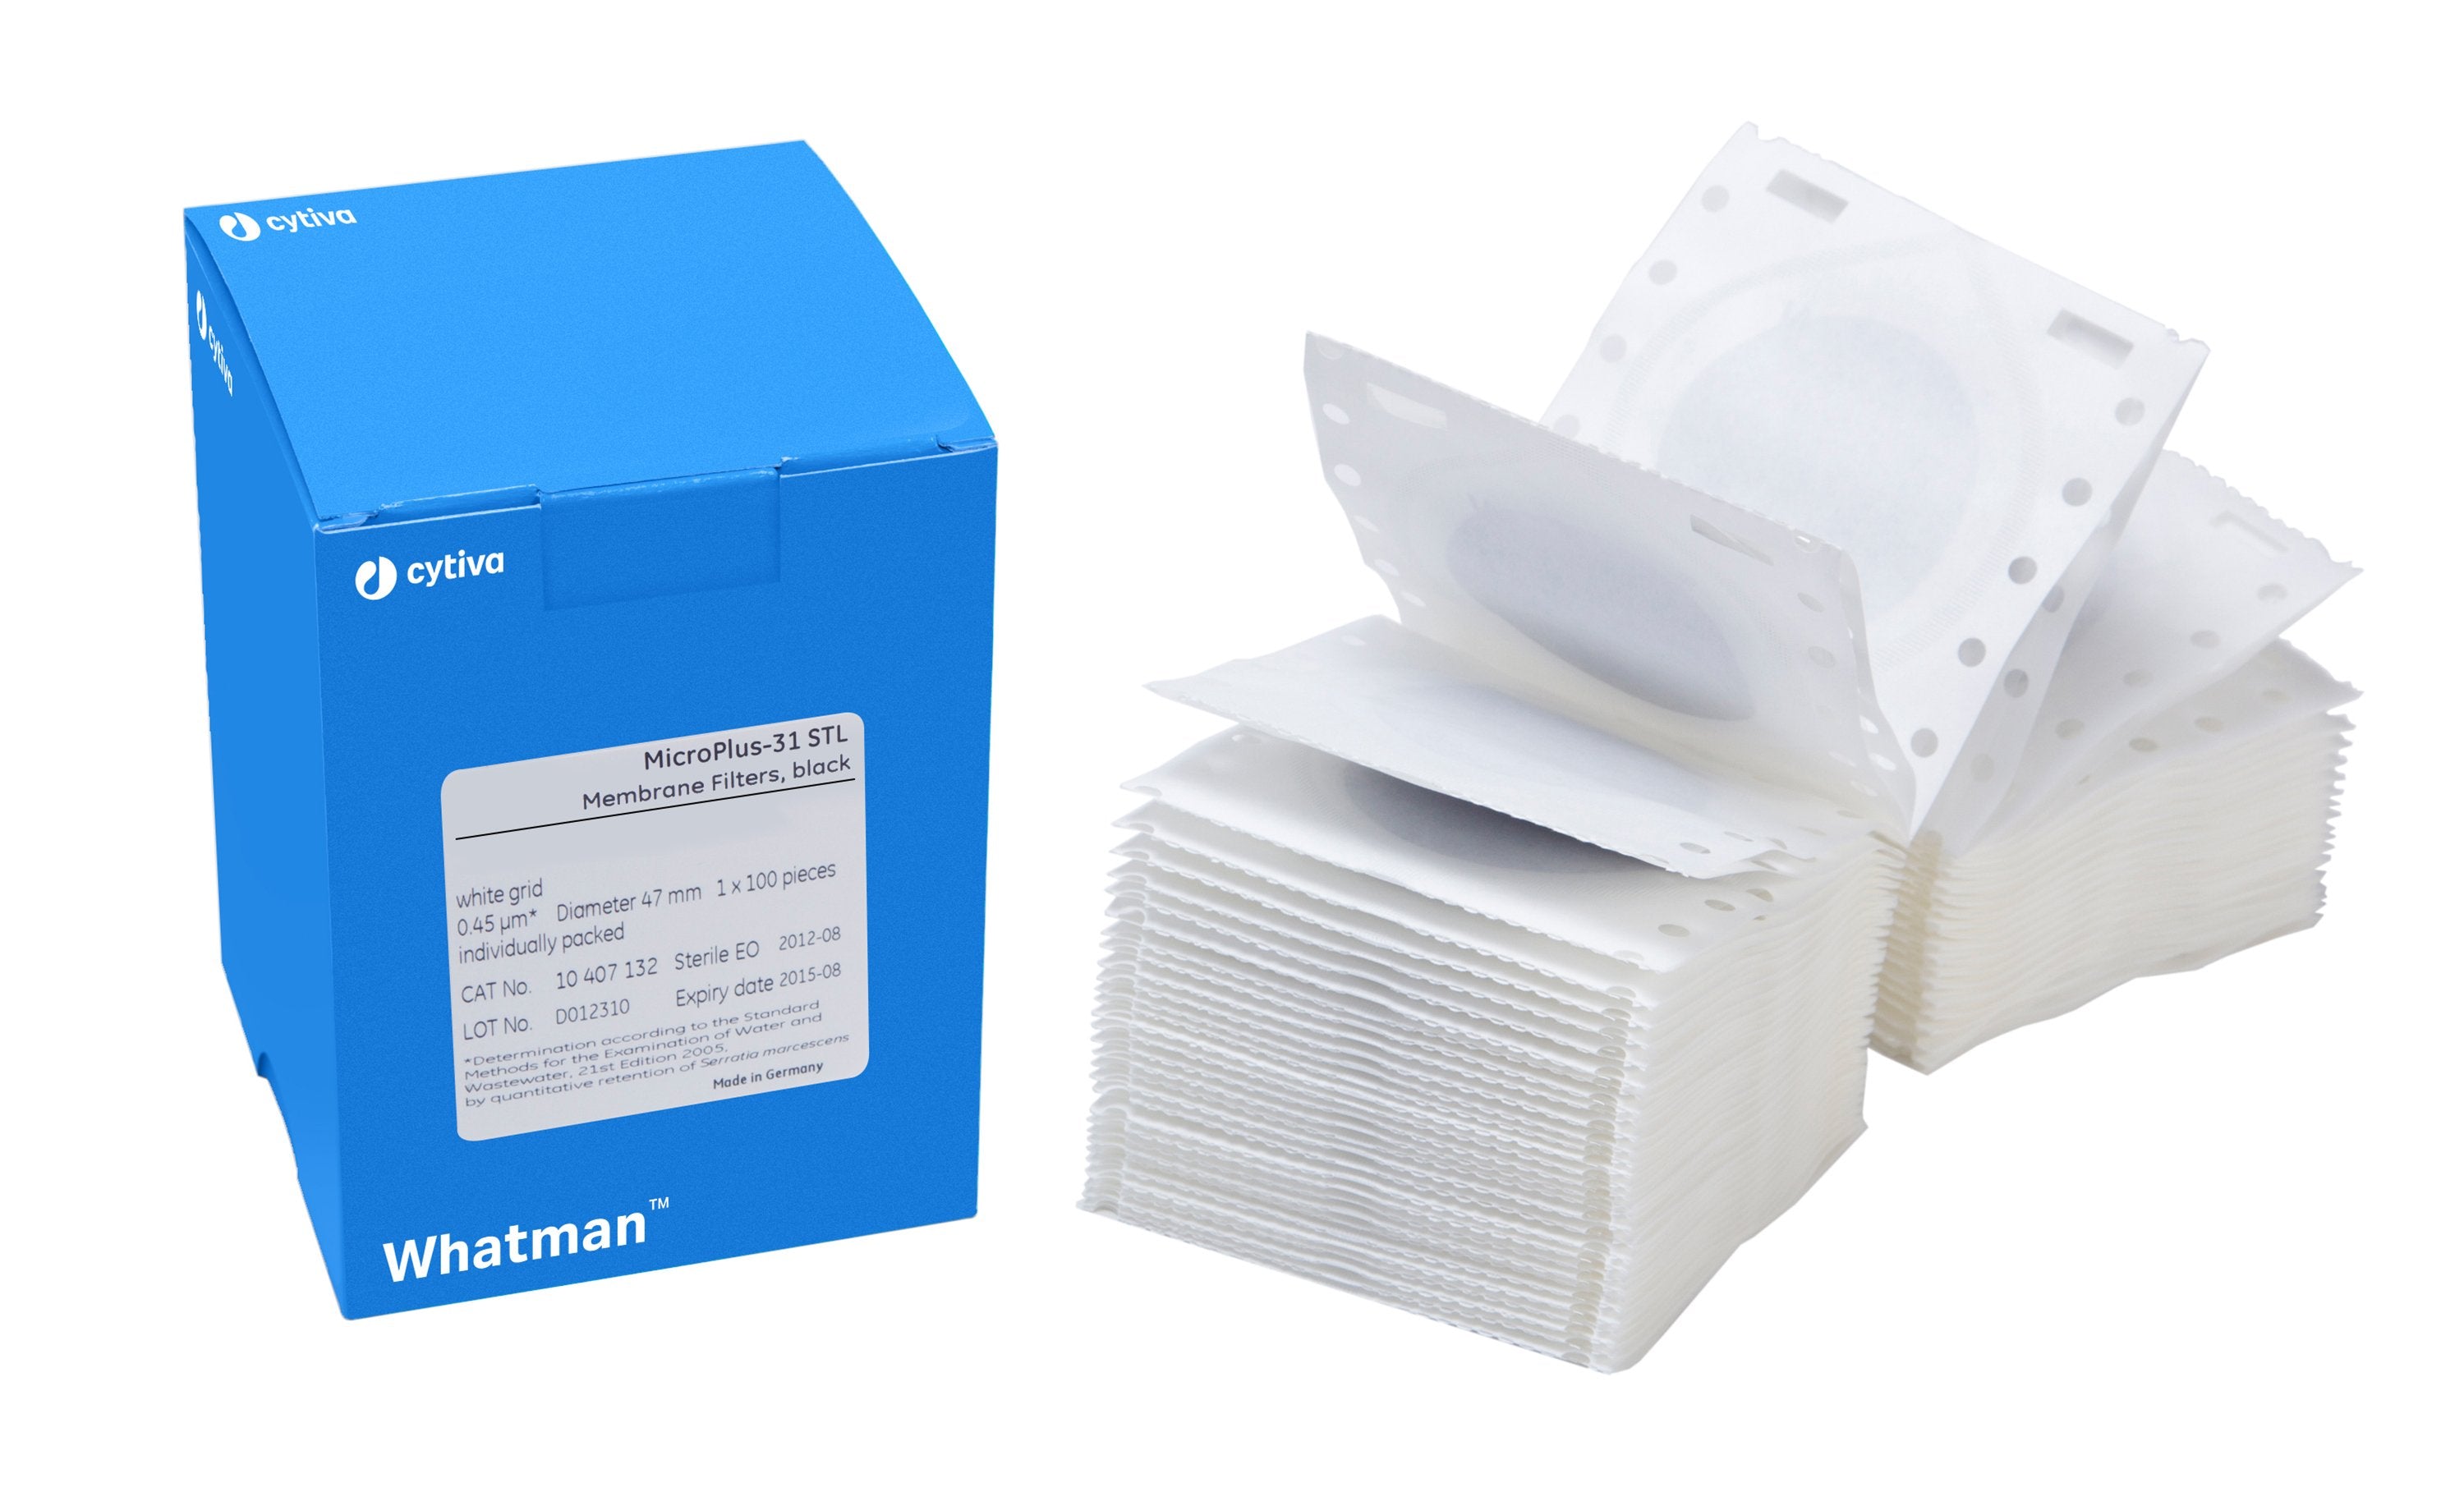 Whatman 10407114 MicroPlus-21, 50mm Dia, White, Black Grid, Sterile For Use with Whatman Membrane-Butler, 100/pk, 4 pk/bx (PN: 10407114)